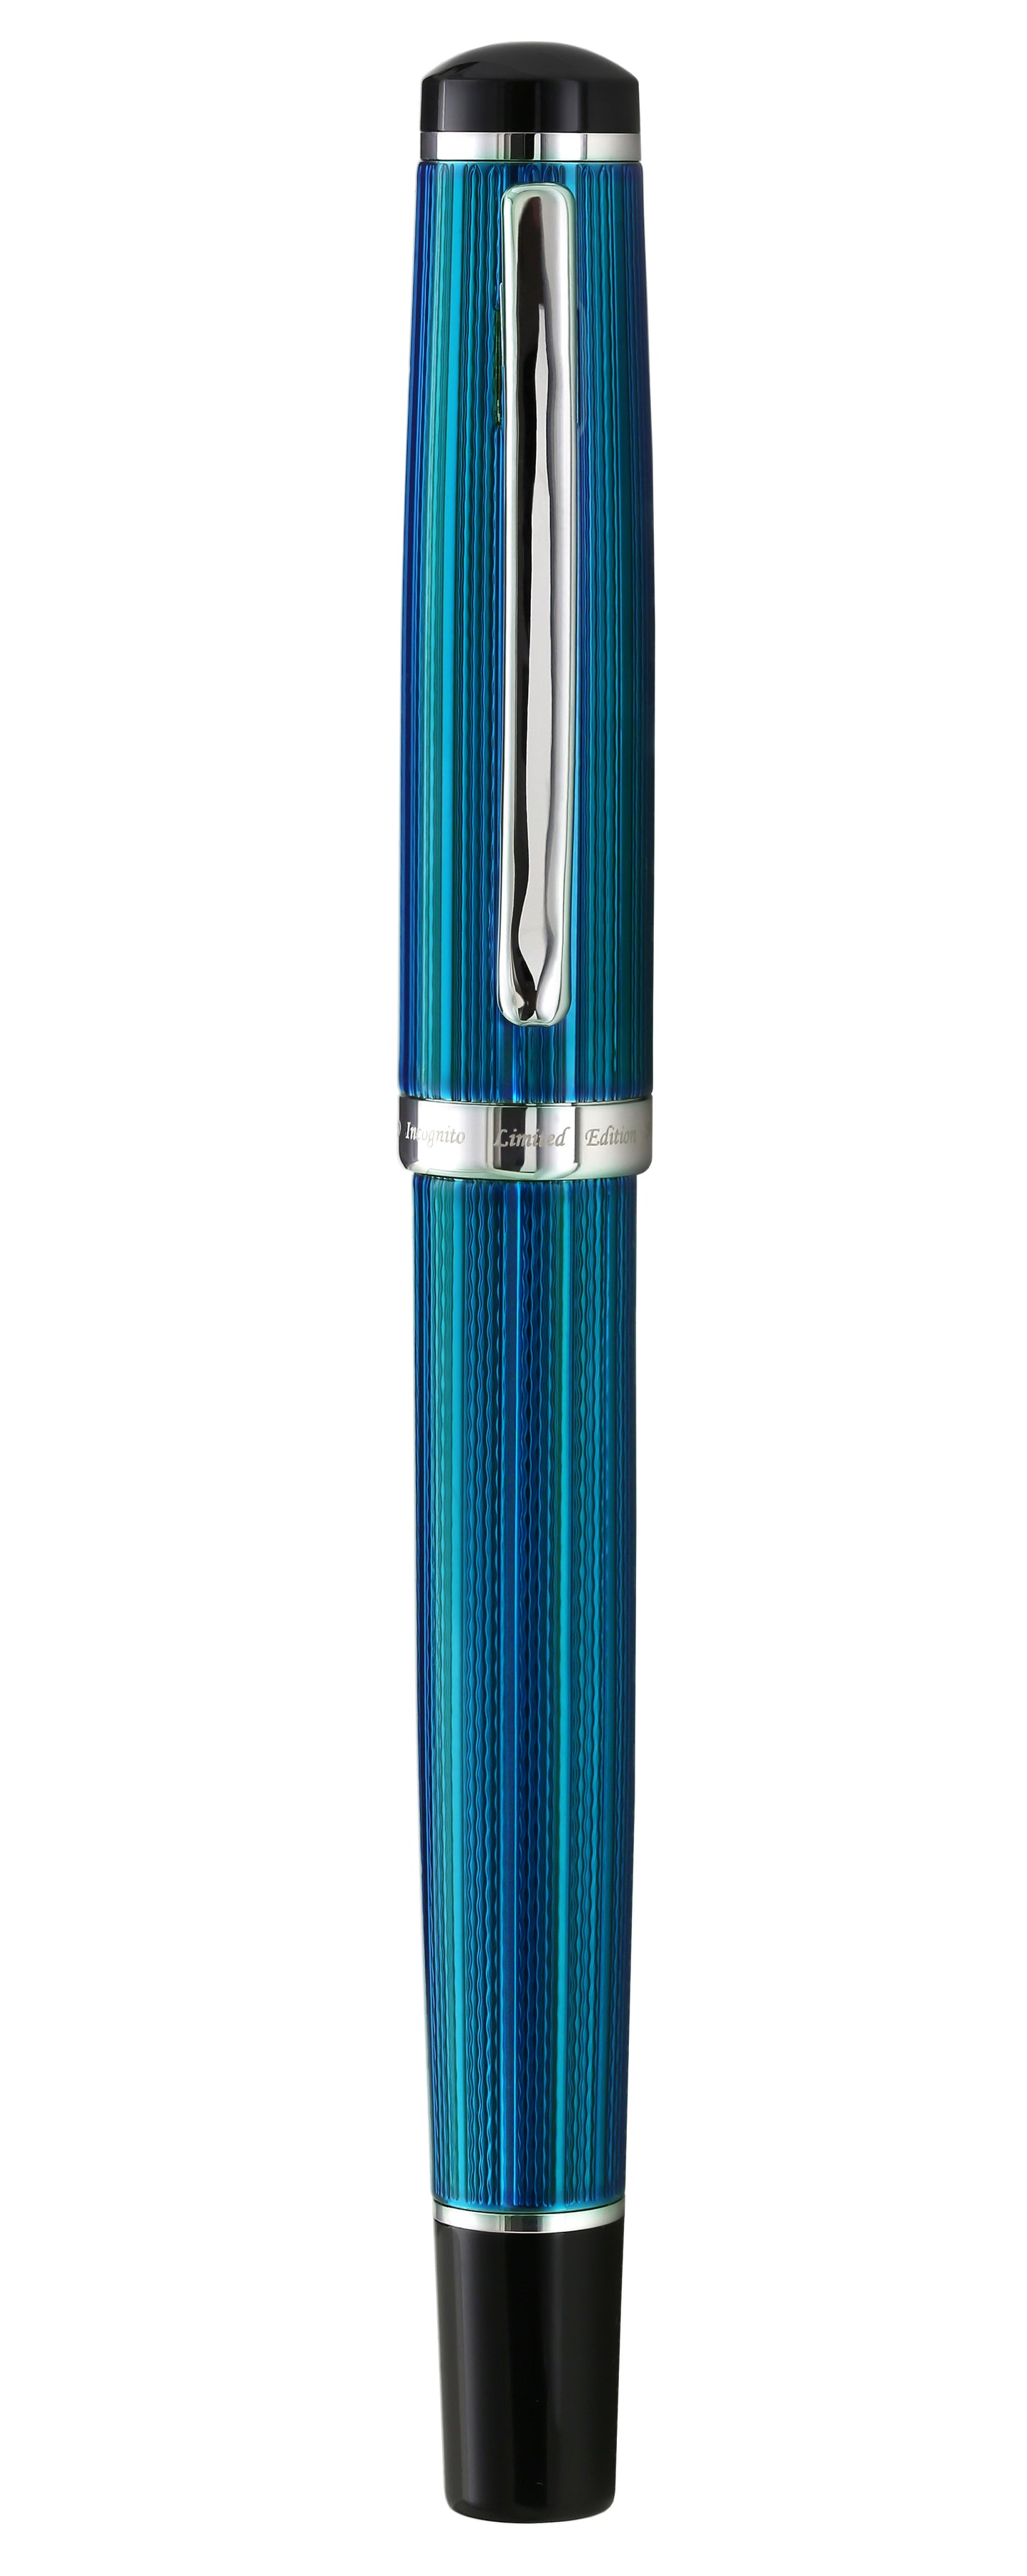 Xezo - Front view of the capped Incognito Blue FM fountain pen